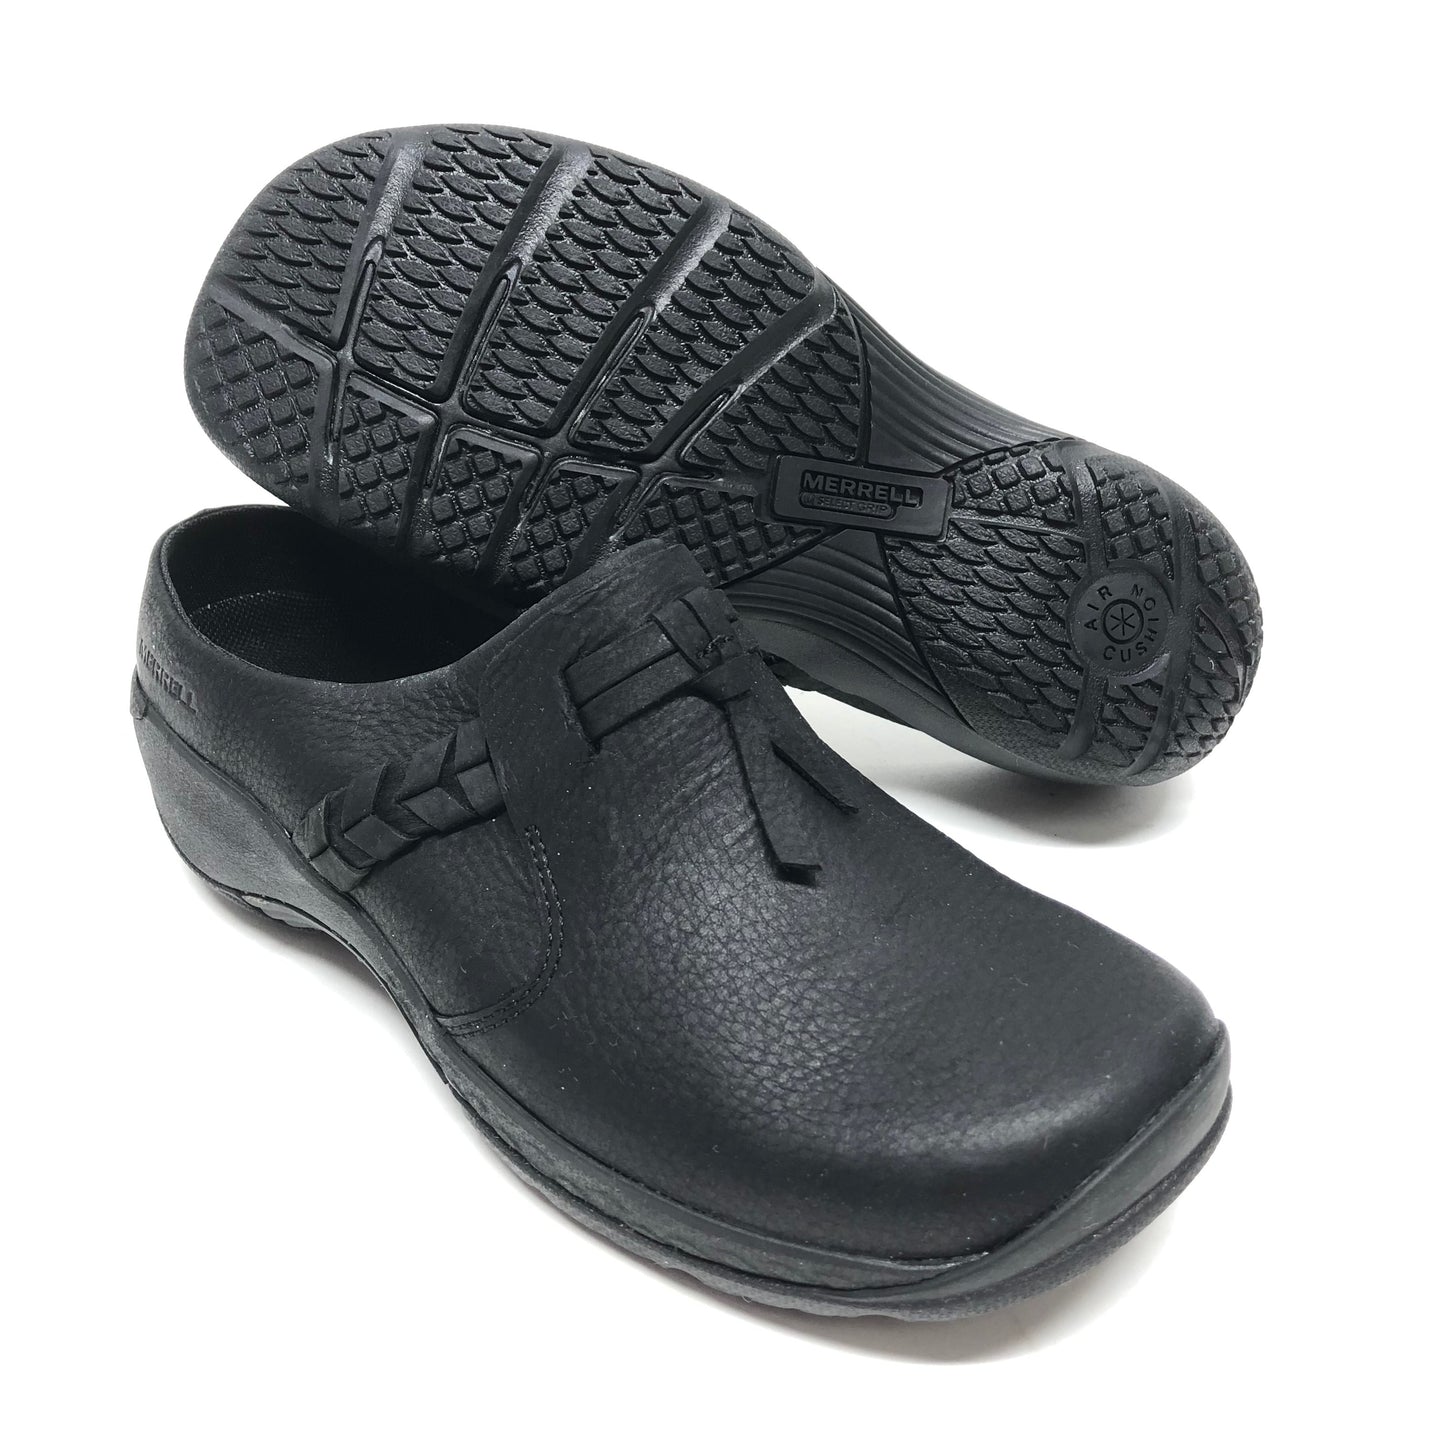 Black Shoes Flats Merrell, Size 7